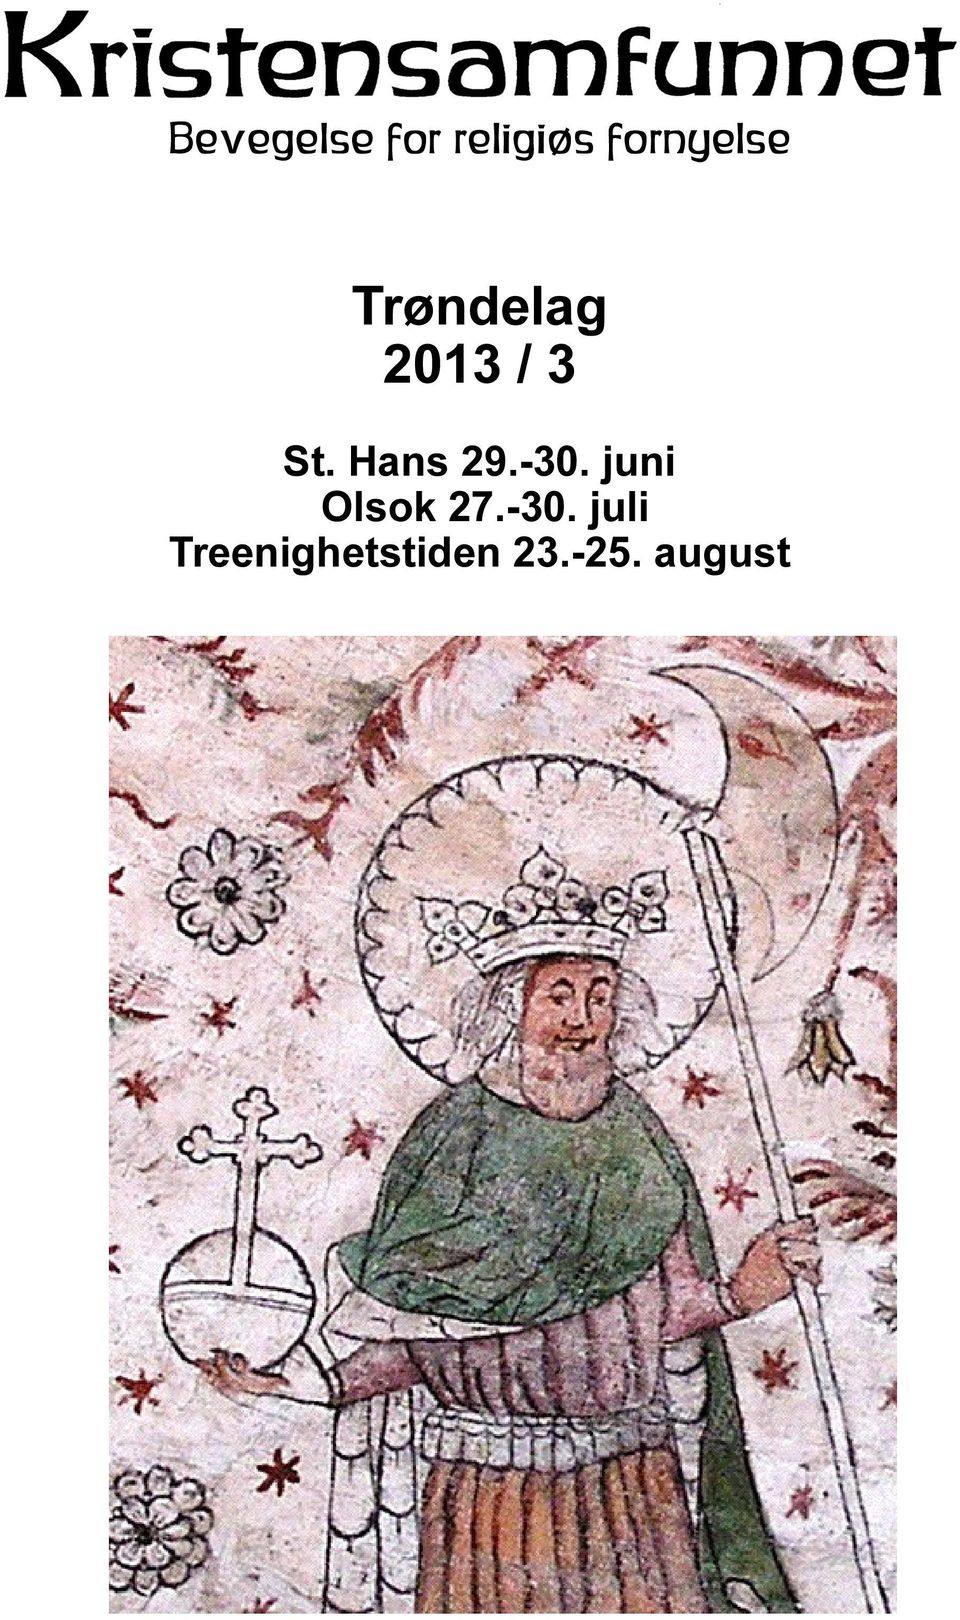 St. Hans 29.-30. juni Olsok 27.